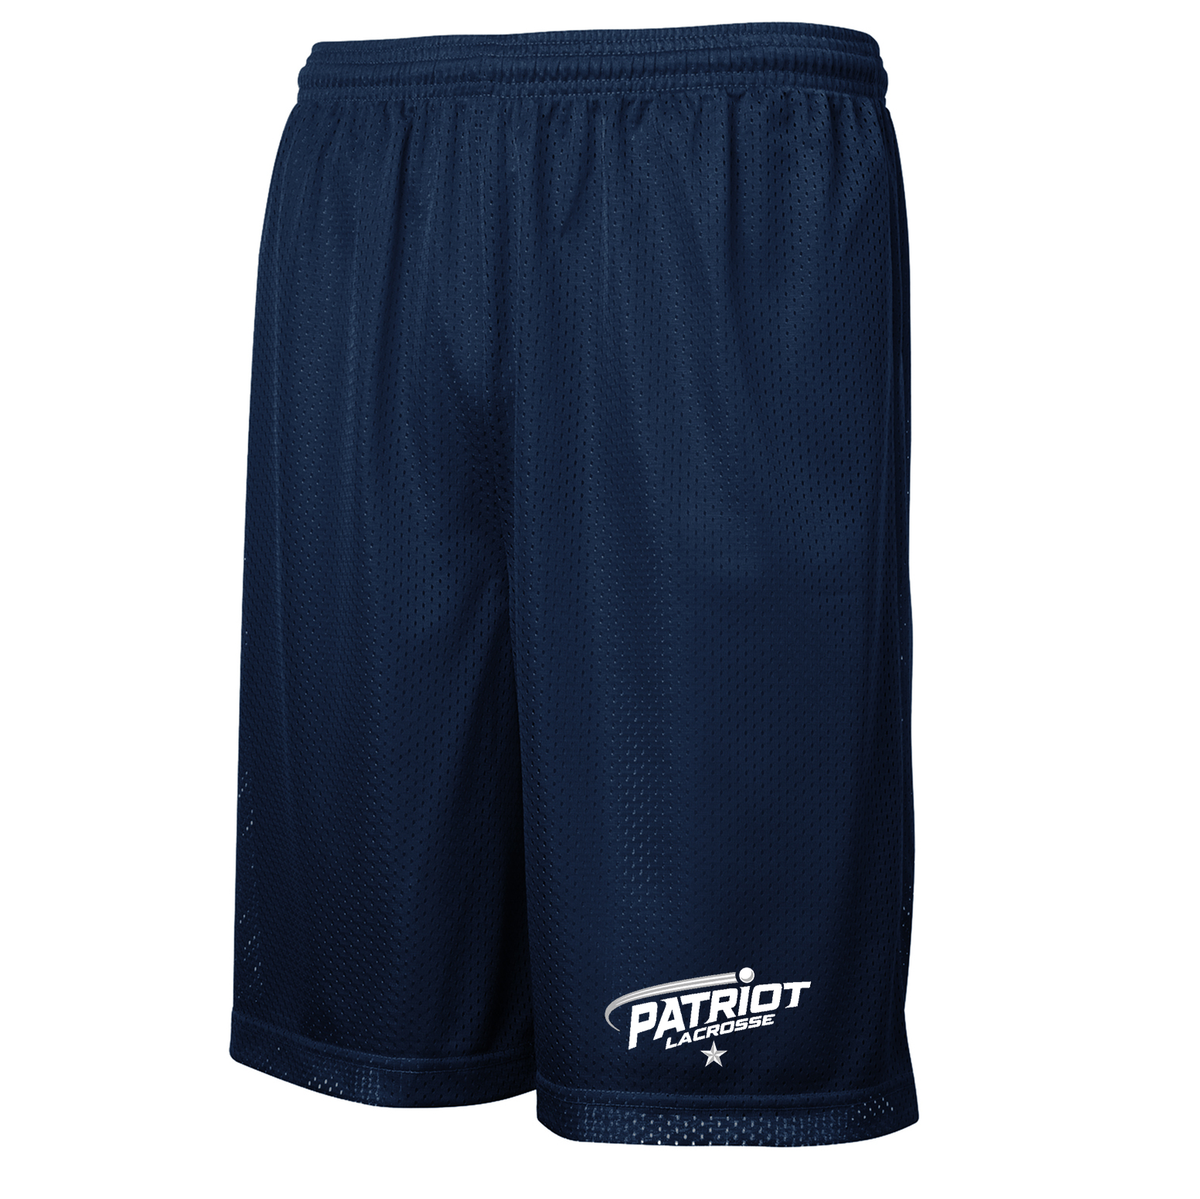 Patriot Lacrosse Classic Mesh Shorts